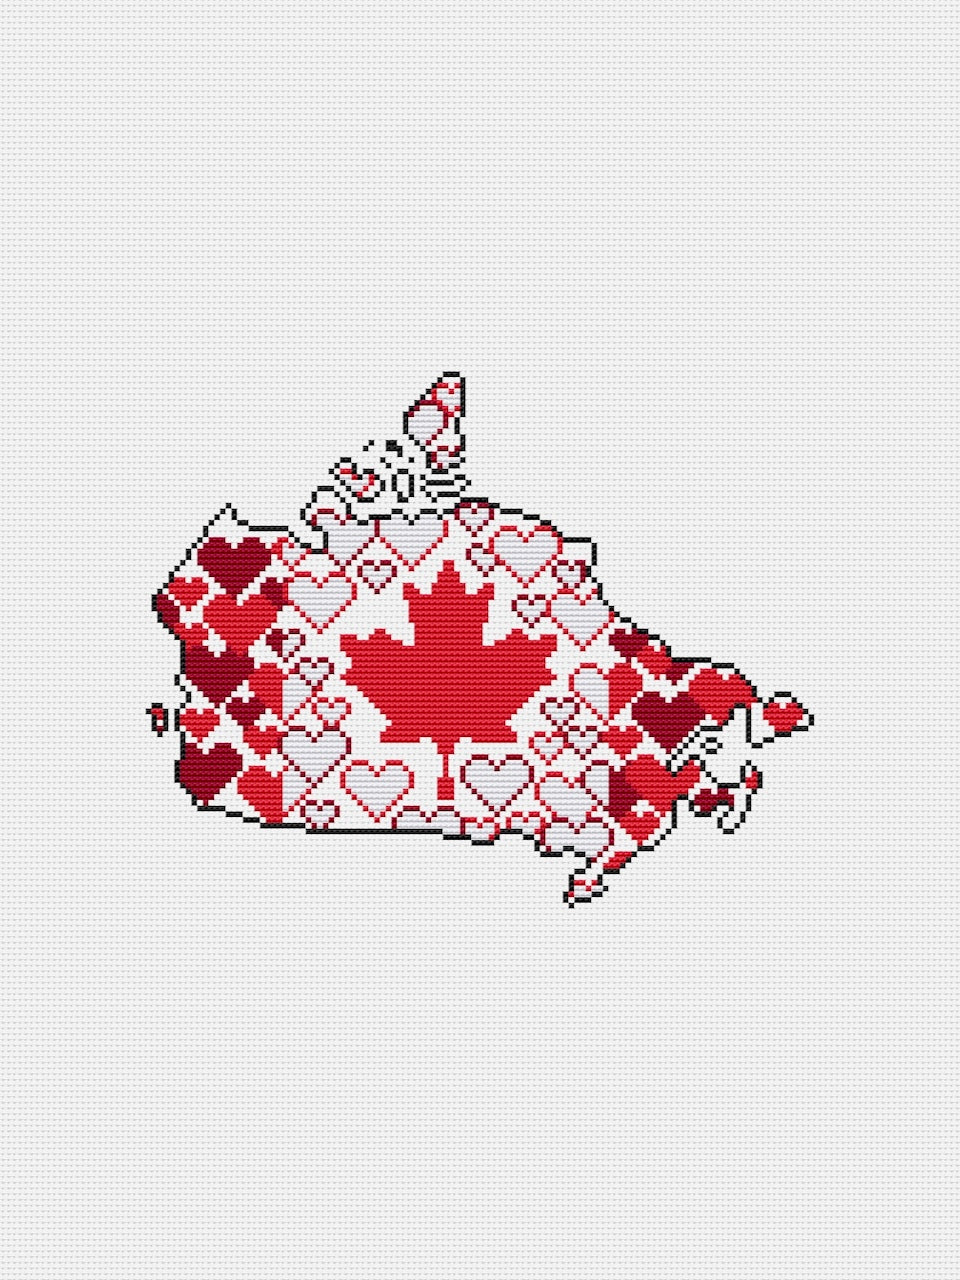 Canada cross stitch pattern free